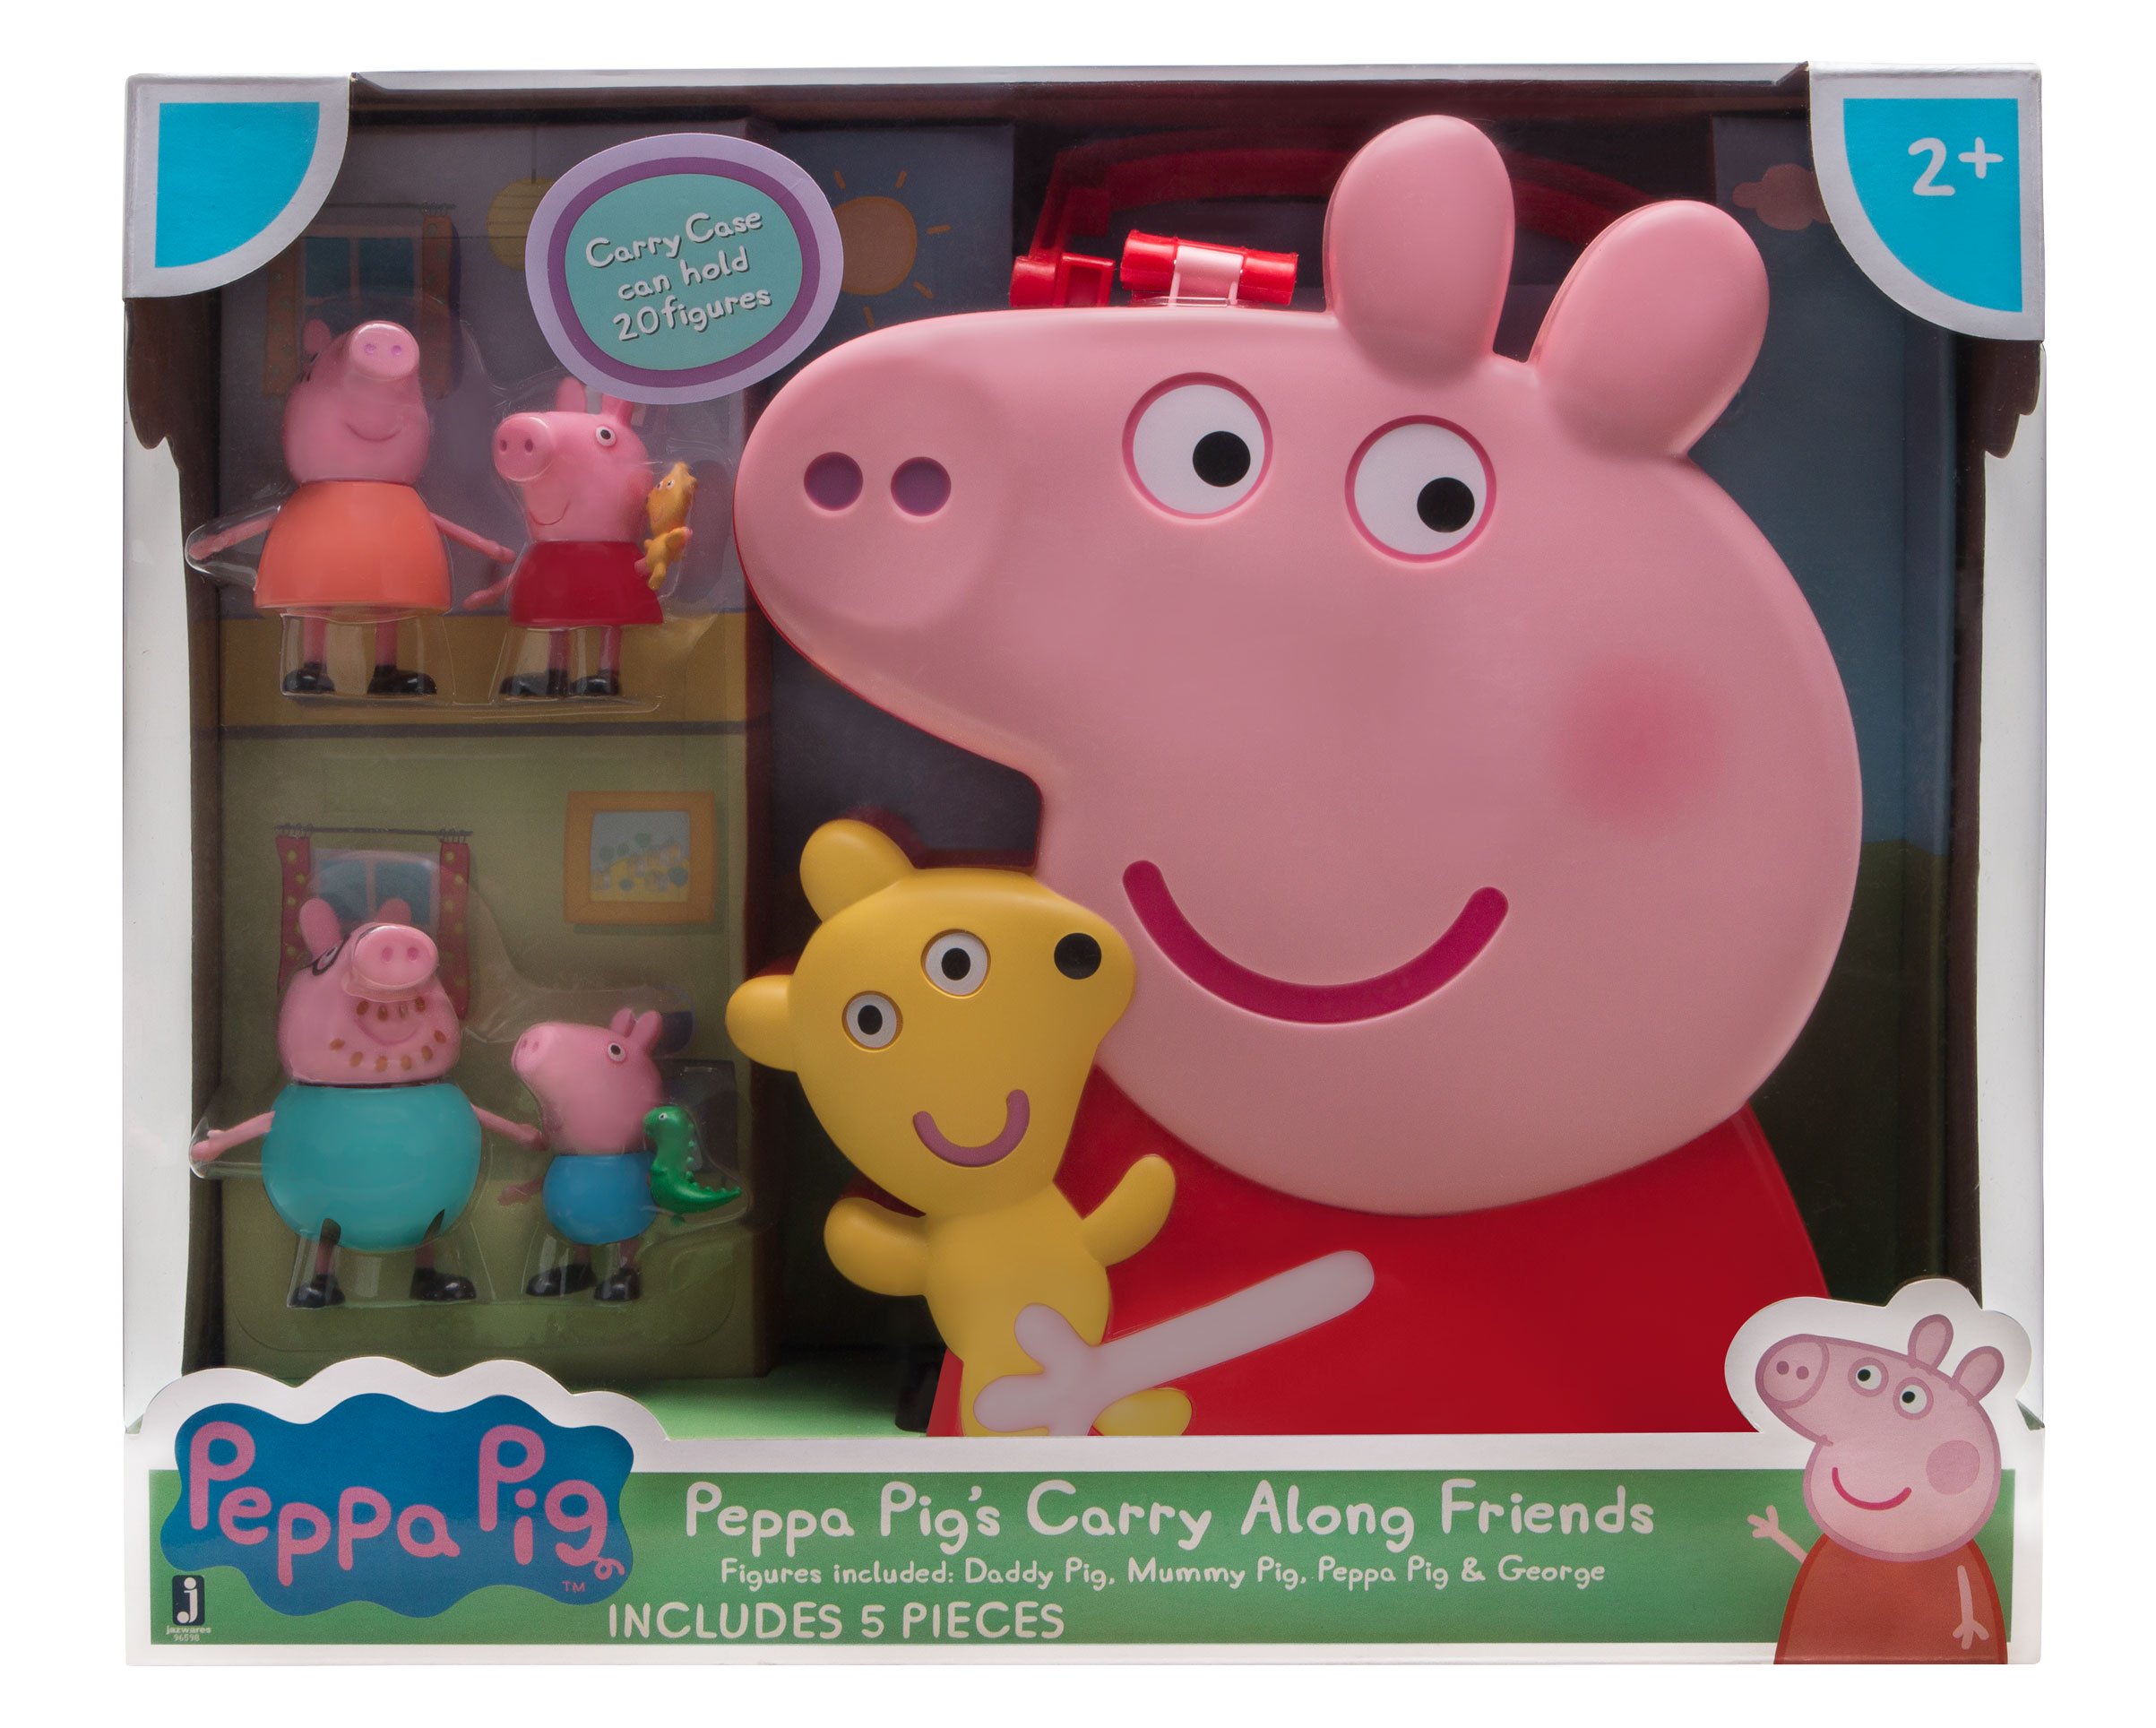 Peppa Pig 4-Figure Carry Case Storage